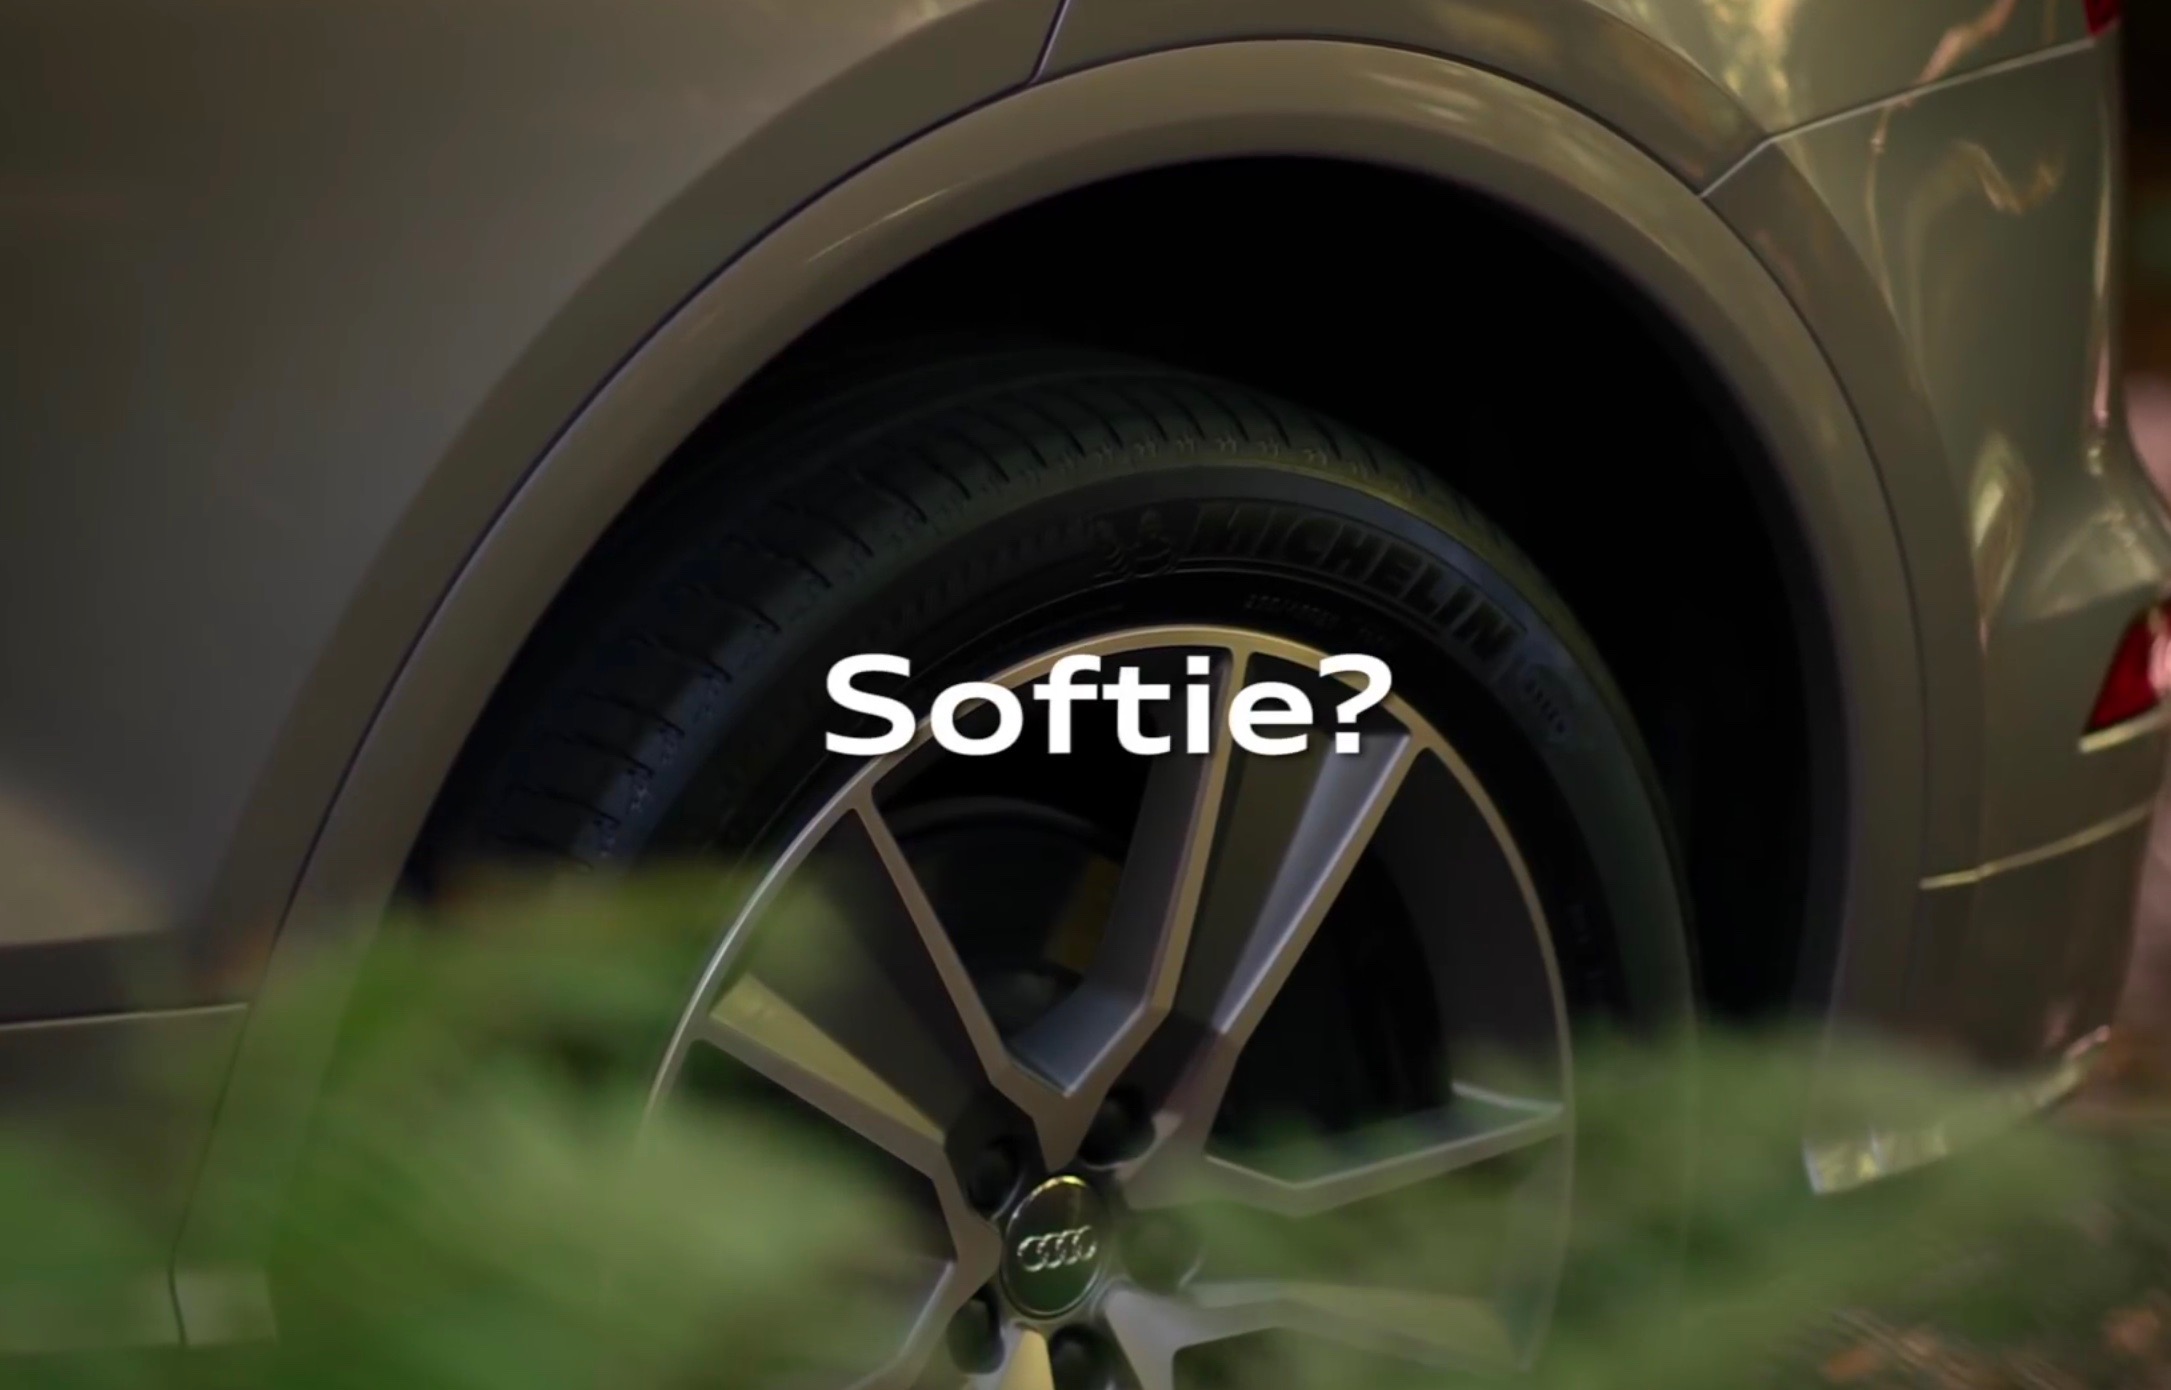 2017 Audi Q5 previewed again, air suspension confirmed (video)